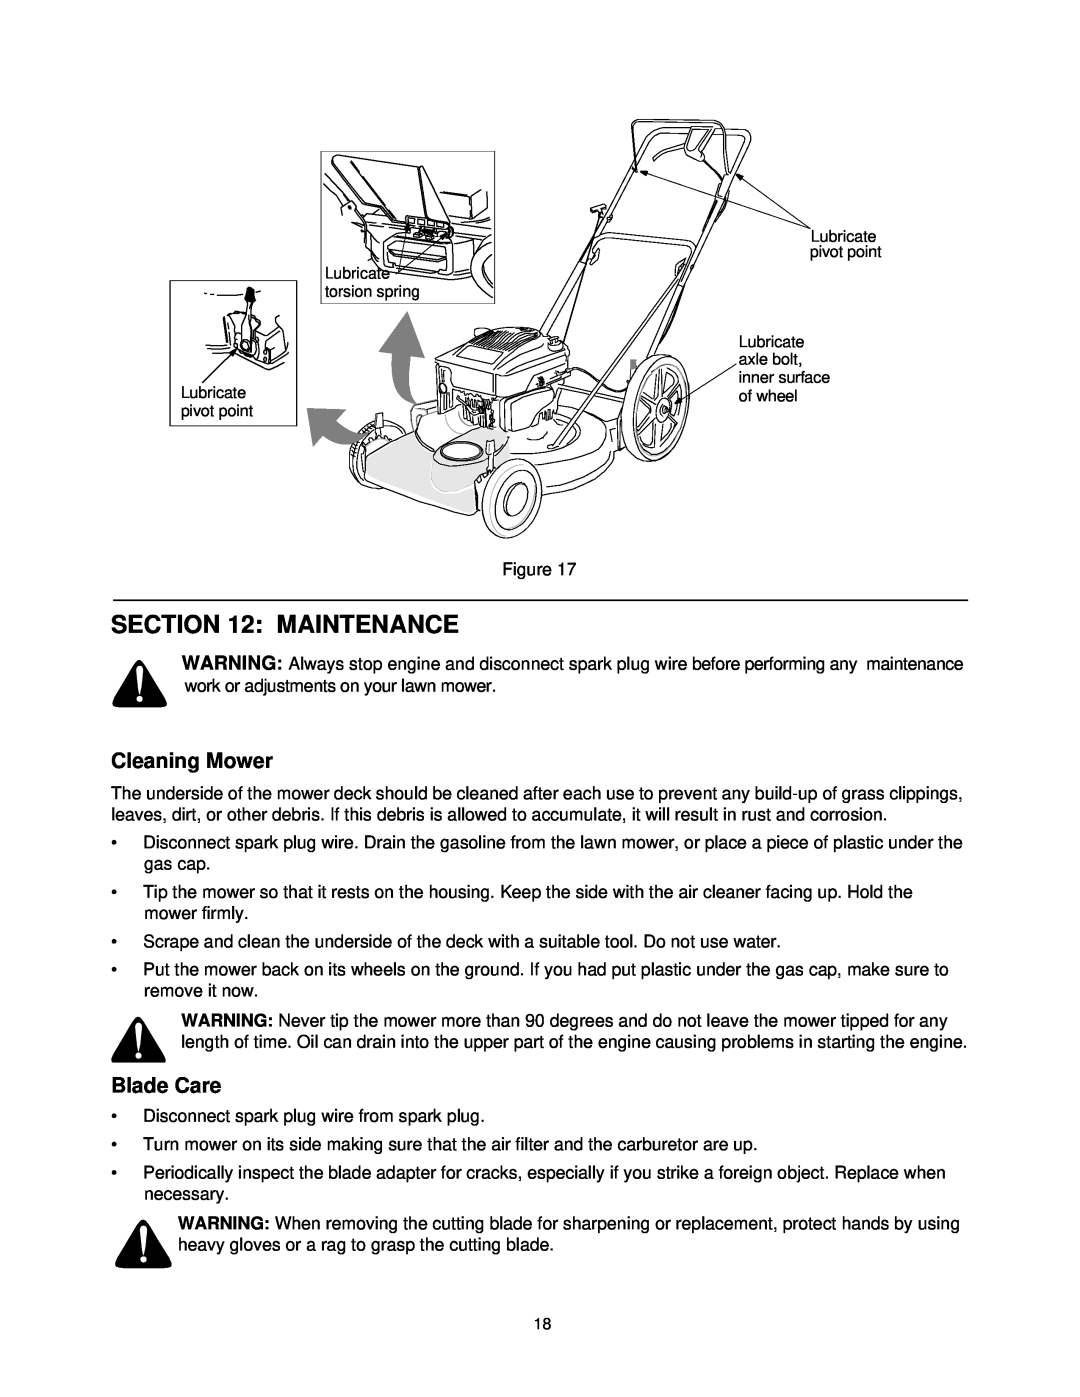 Yard Machines 580 Series manual Maintenance, Cleaning Mower, Blade Care 